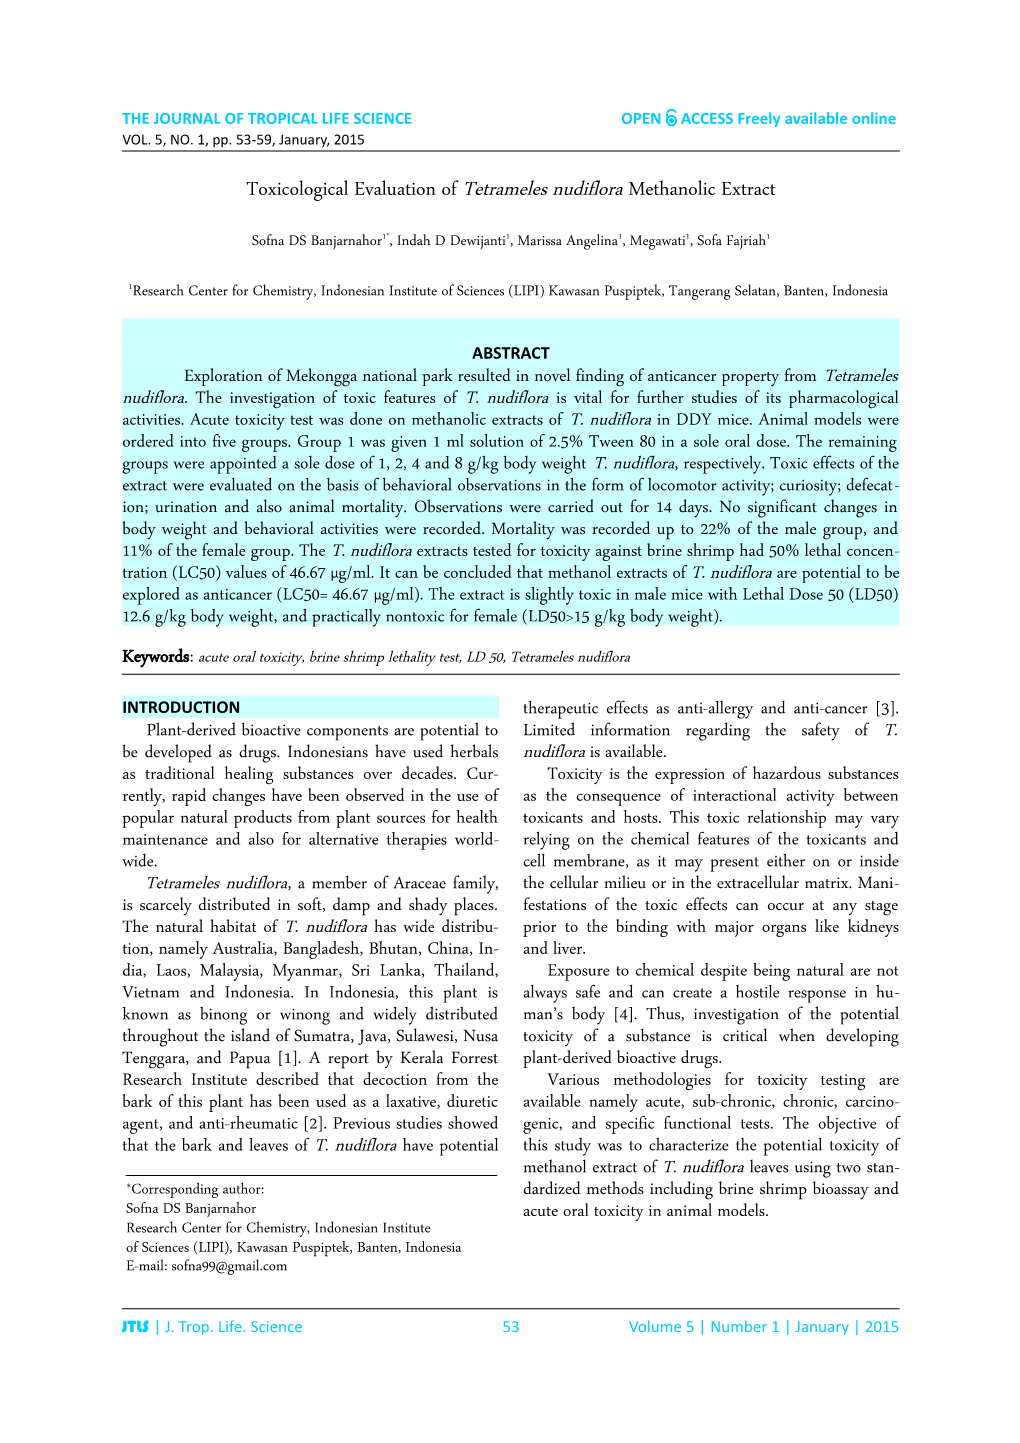 Toxicological Evaluation of Tetrameles Nudiflora Methanolic Extract